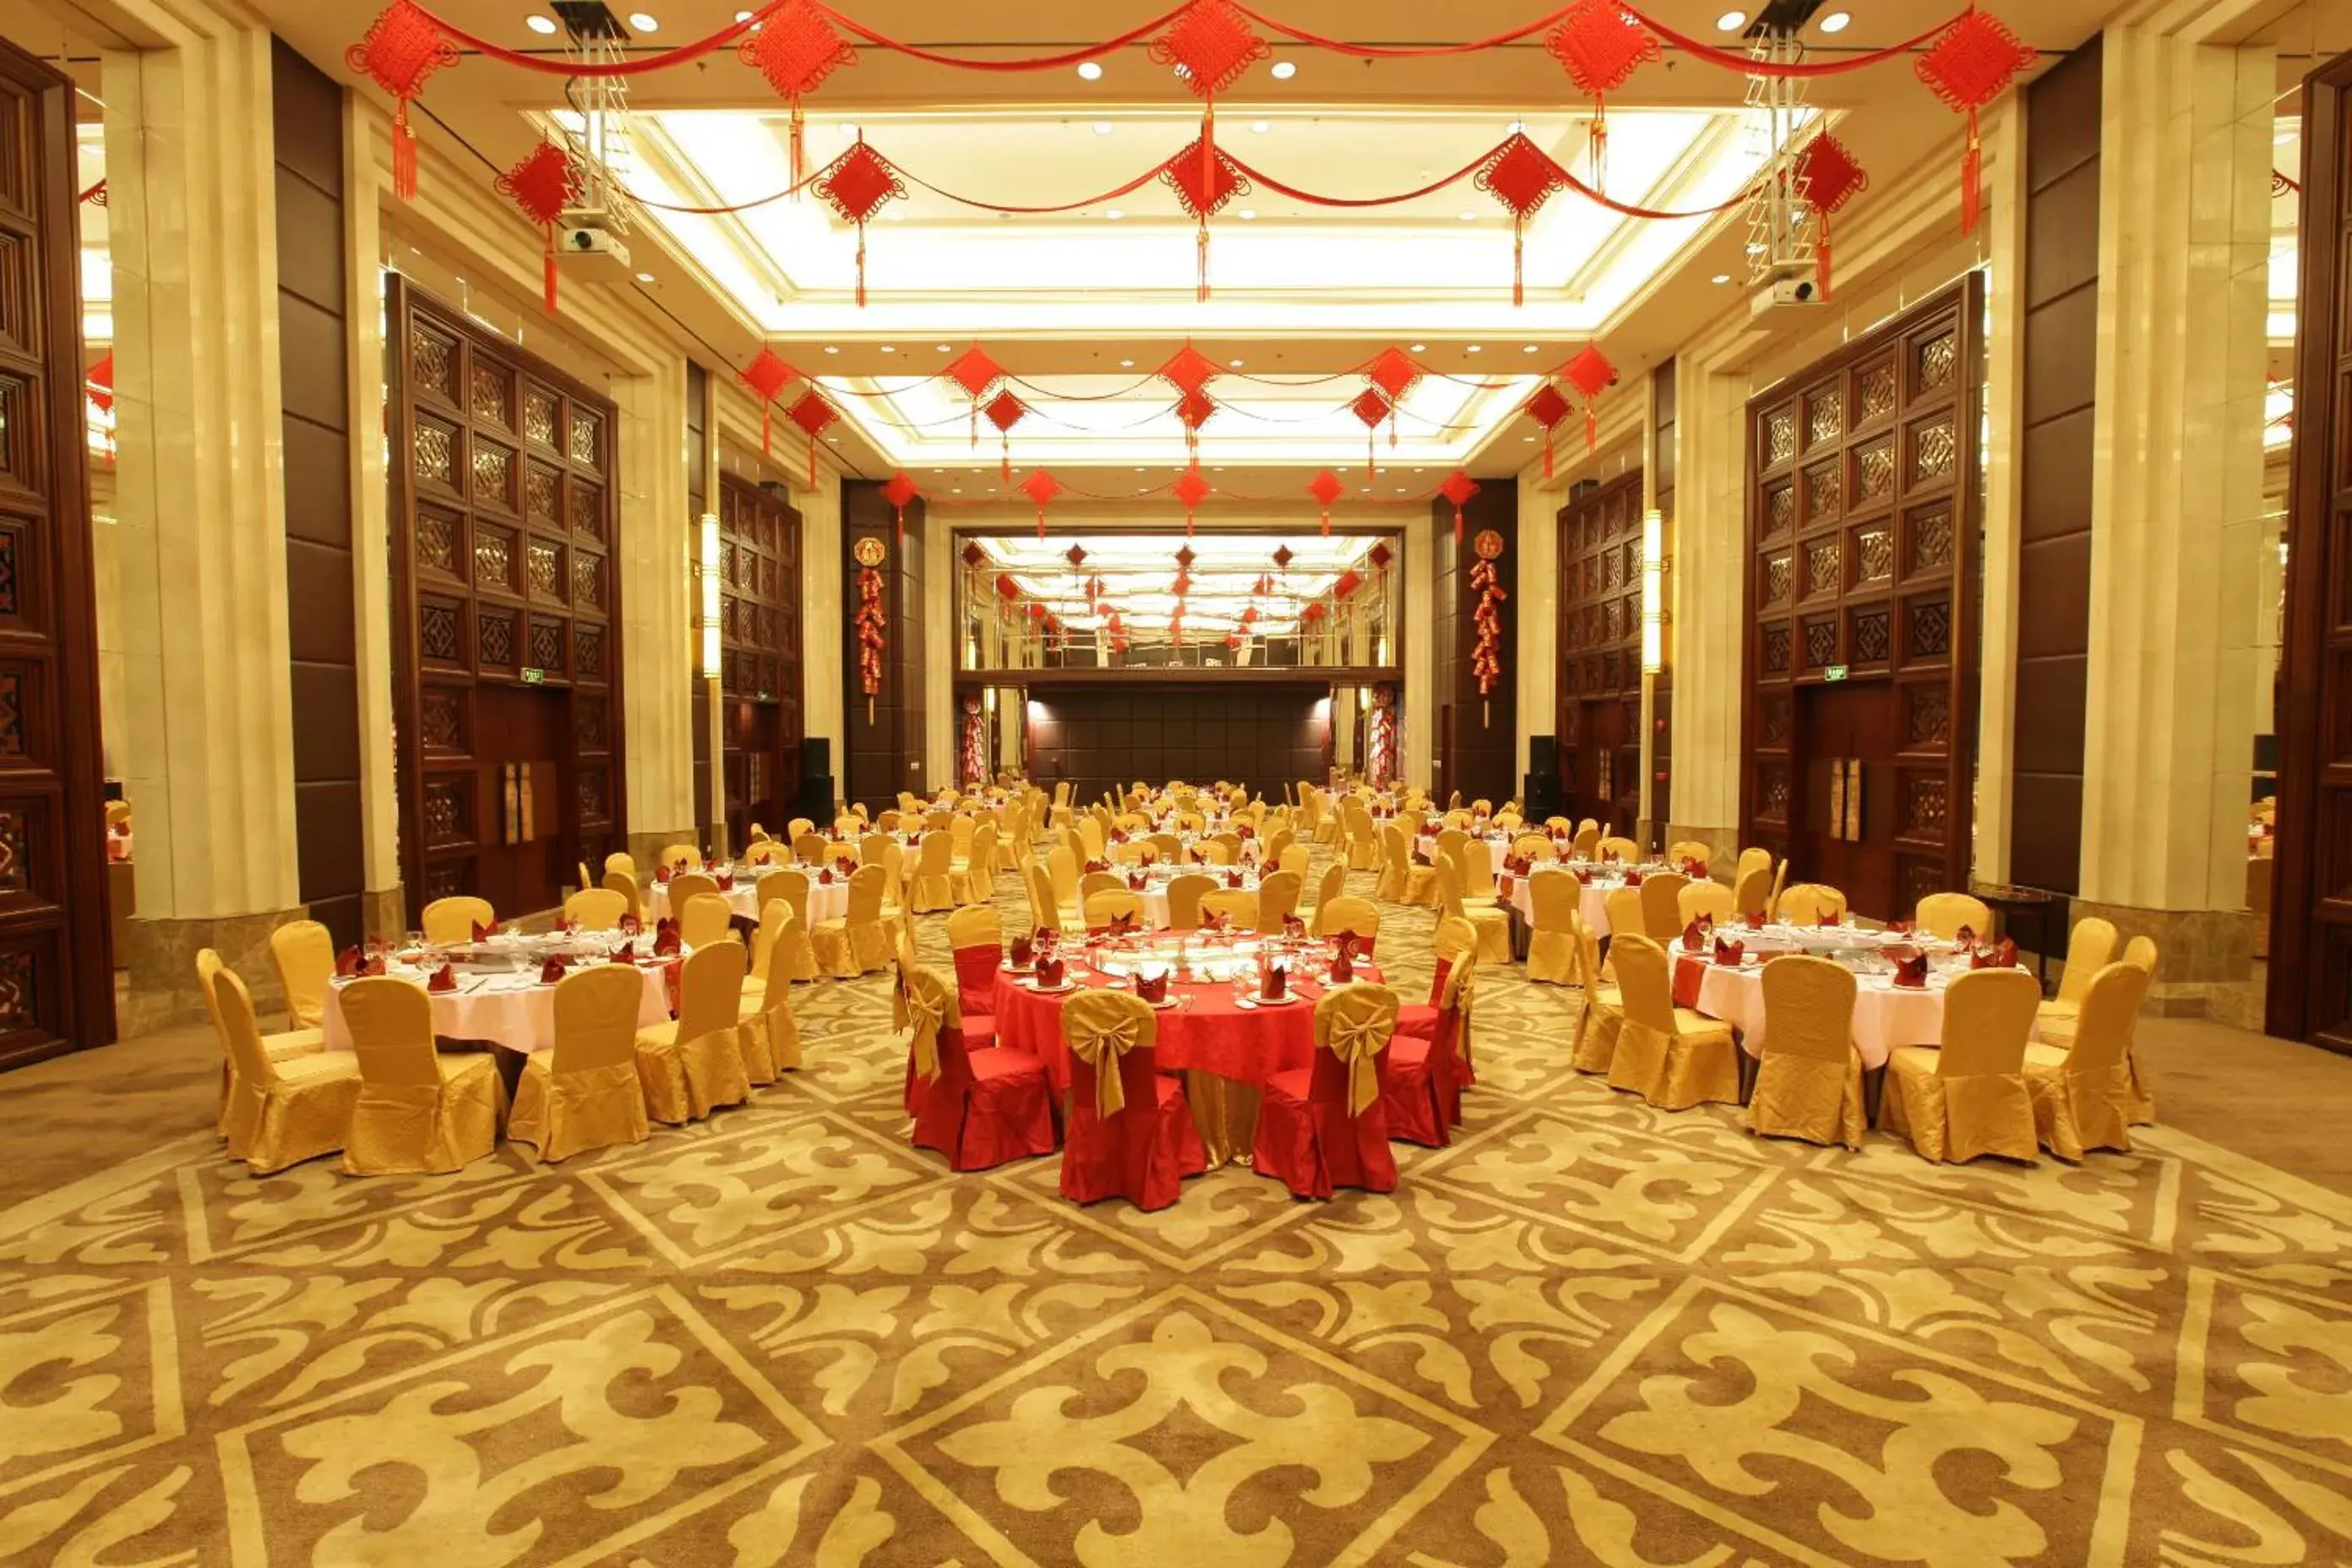 Banquet/Function facilities, Banquet Facilities in Grand Royal Hotel